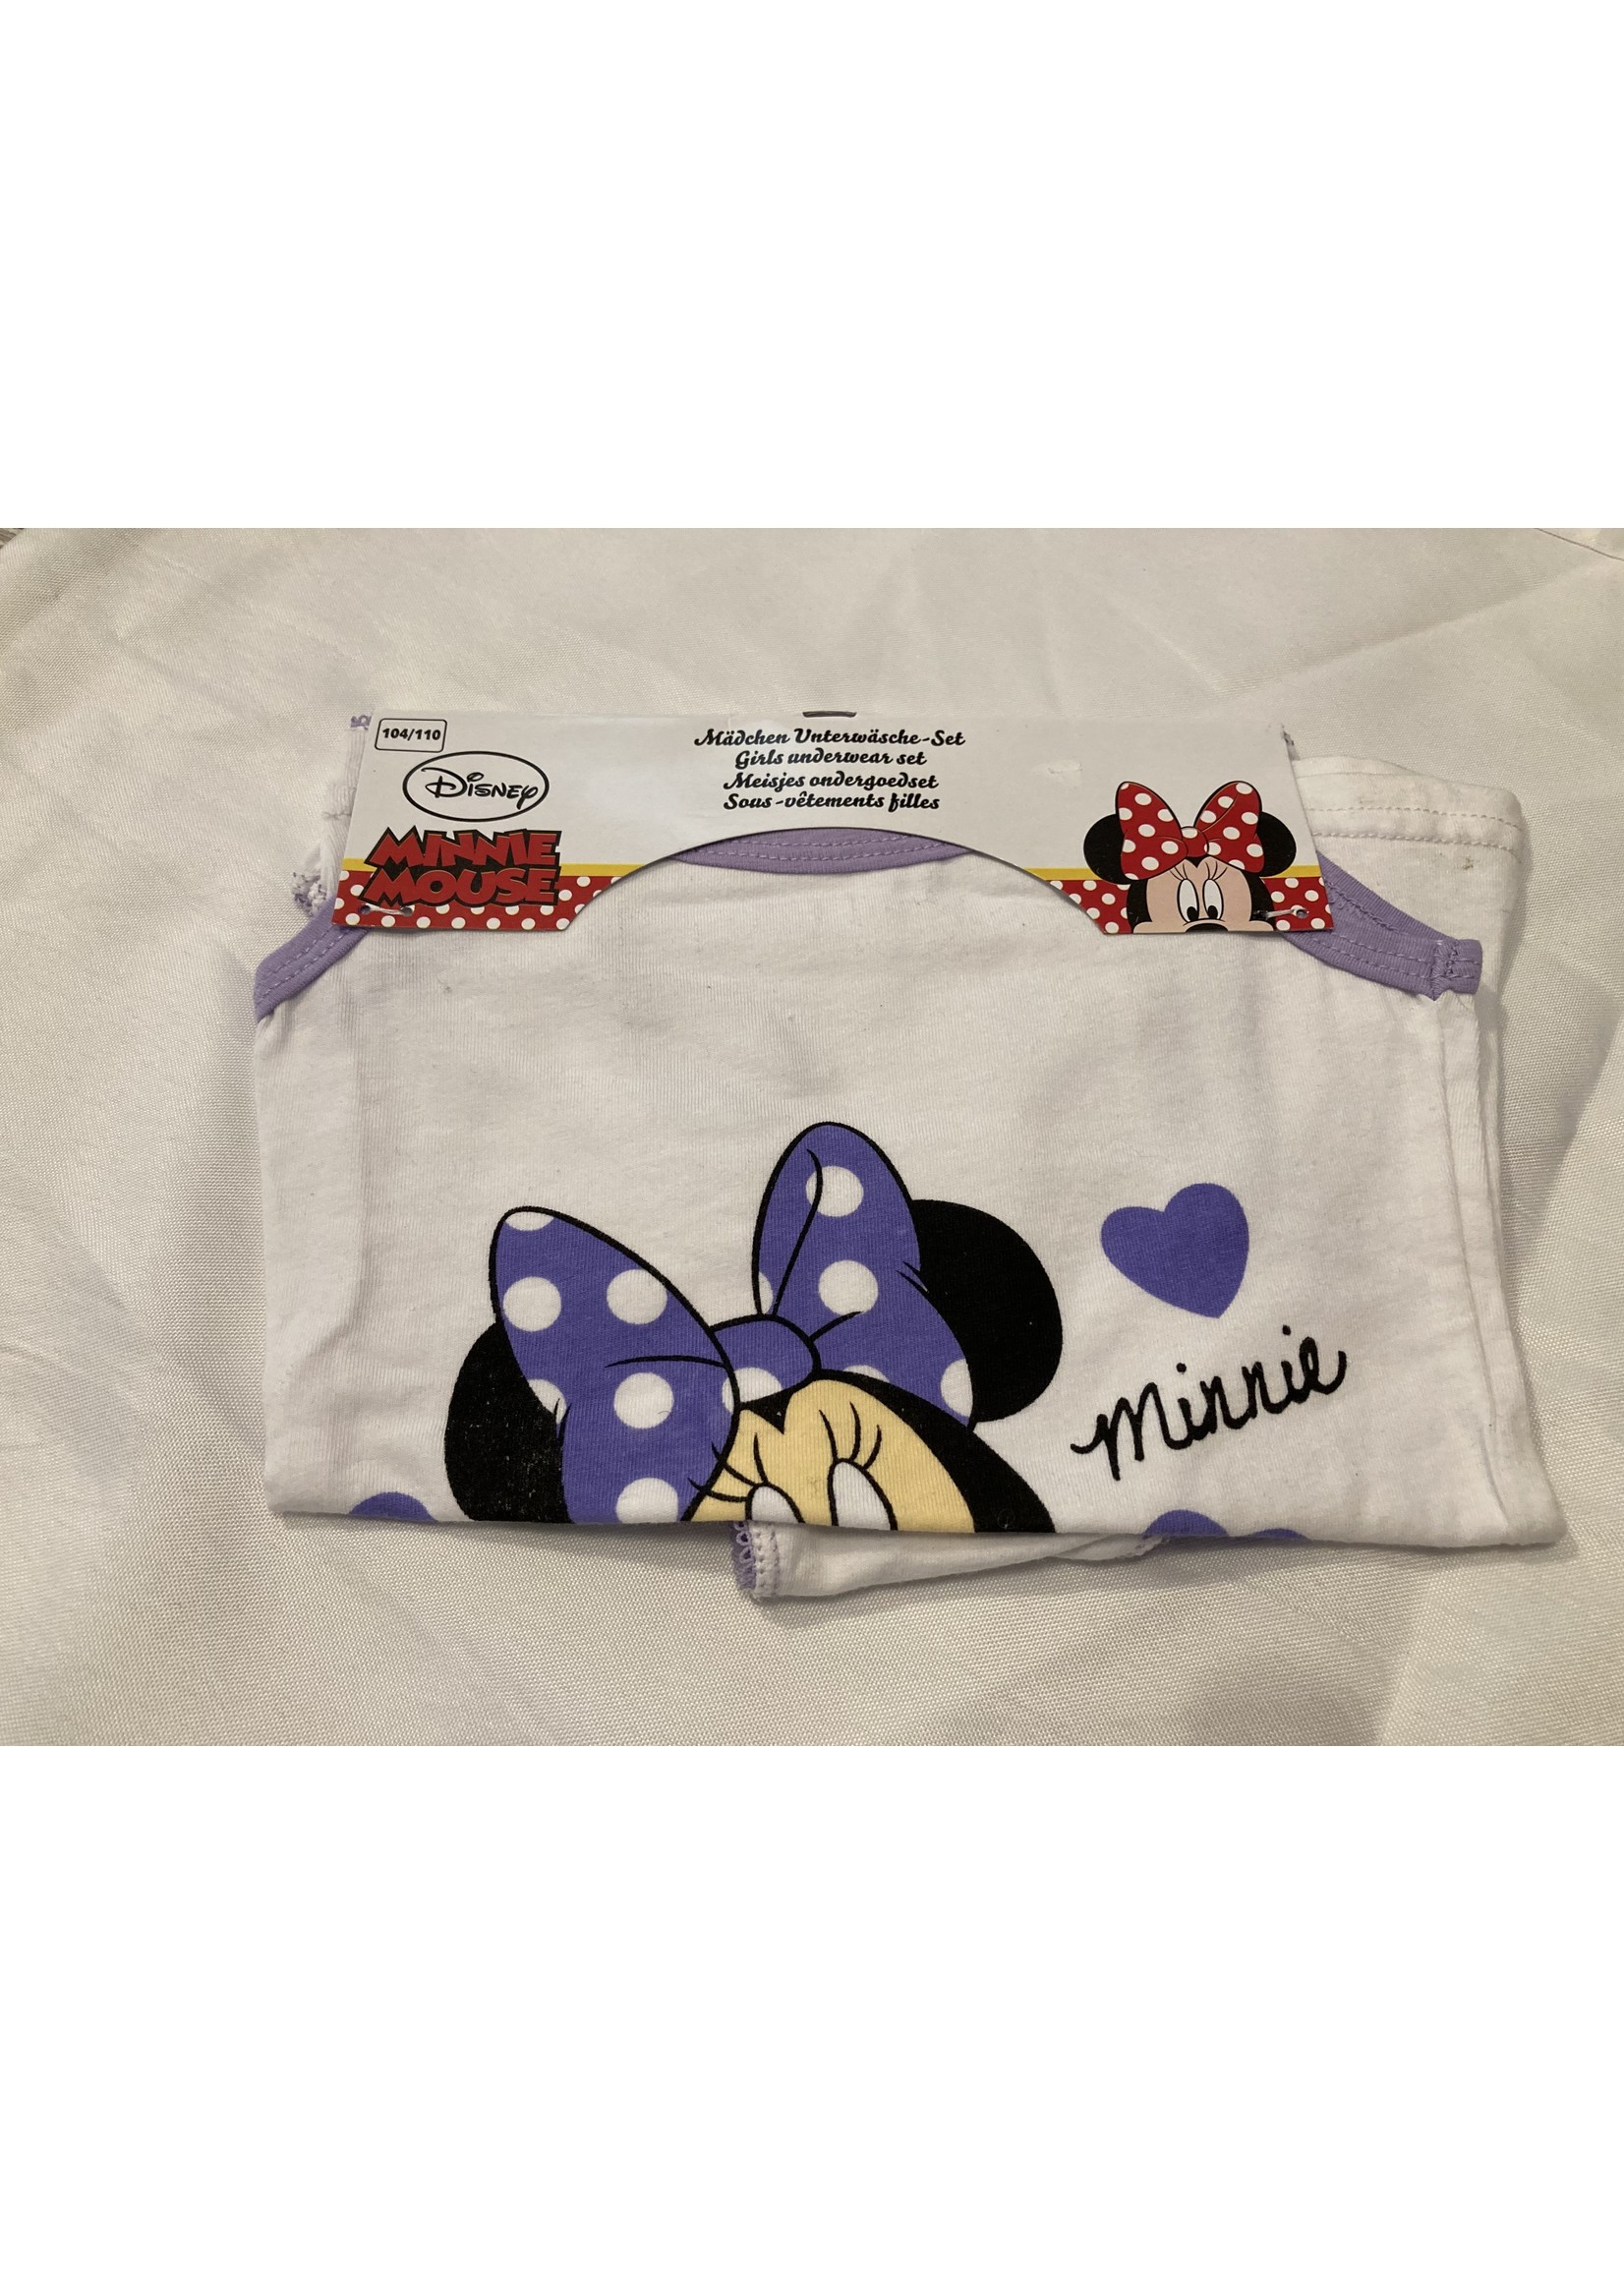 Disney Minnie Mouse ondergoed van Disney wit